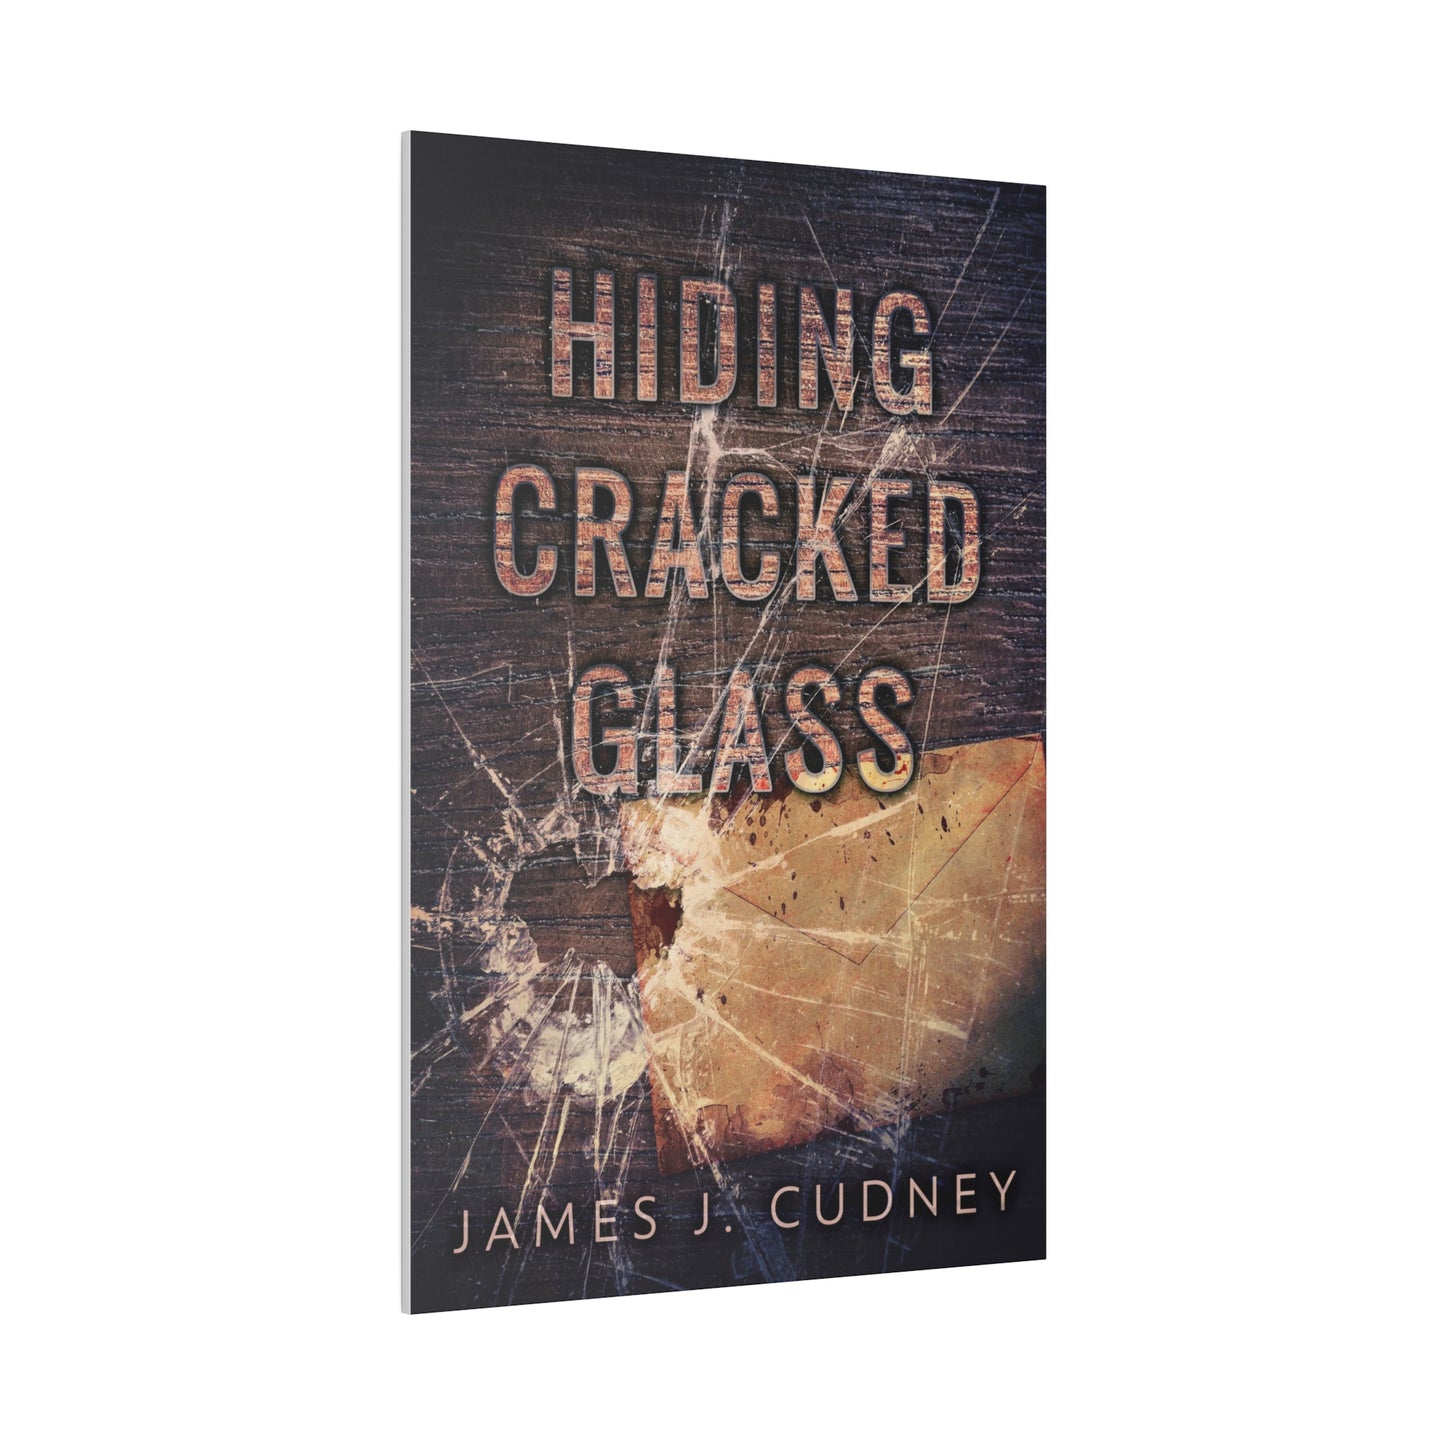 Hiding Cracked Glass - Canvas